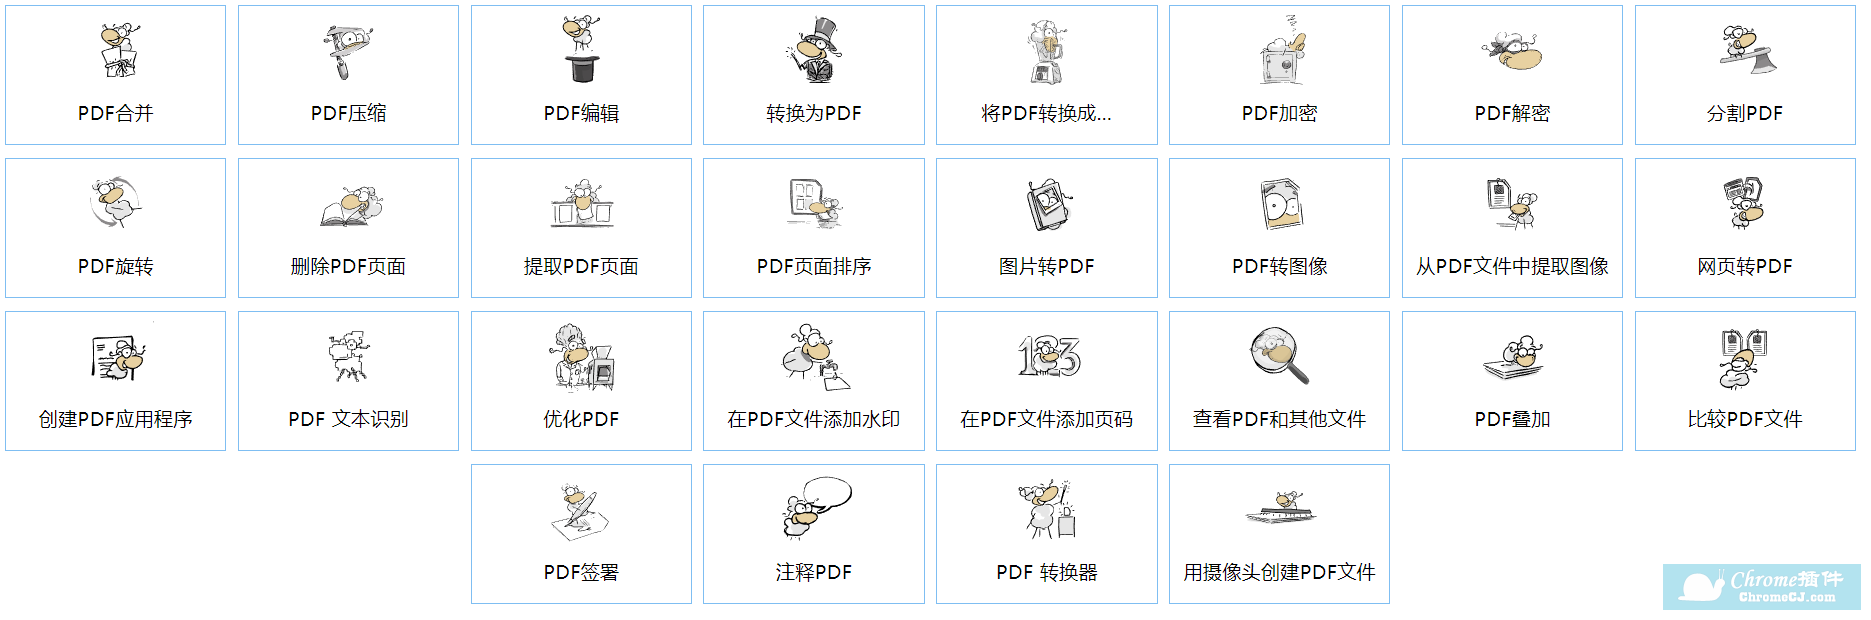 PDF24 Tools PDF 工具简介